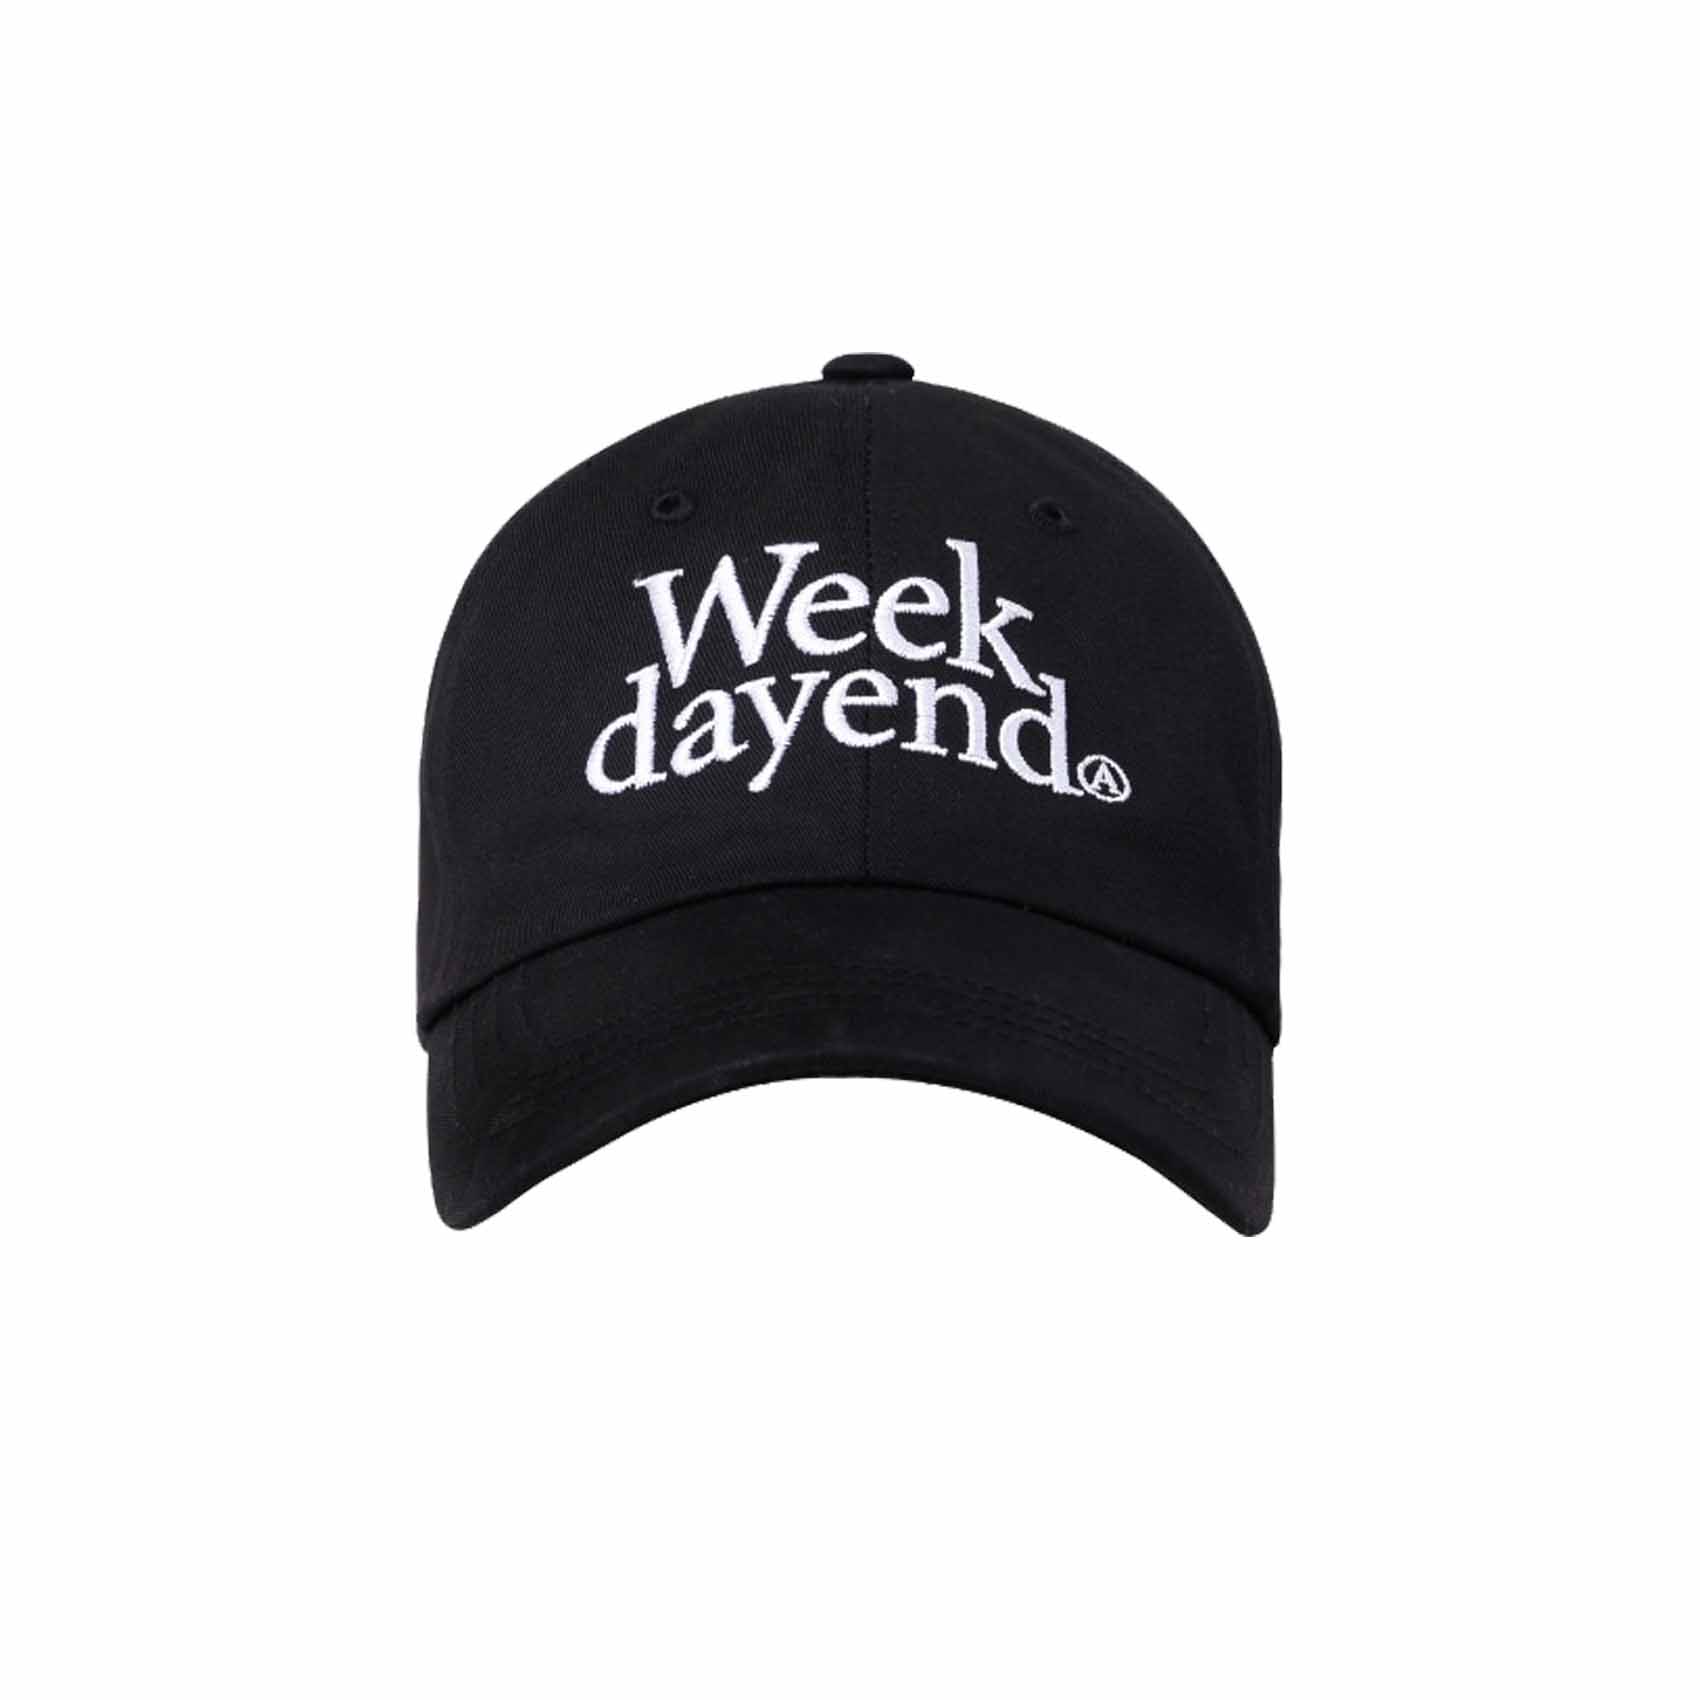 WEEKDAYEND CAP - BLACK